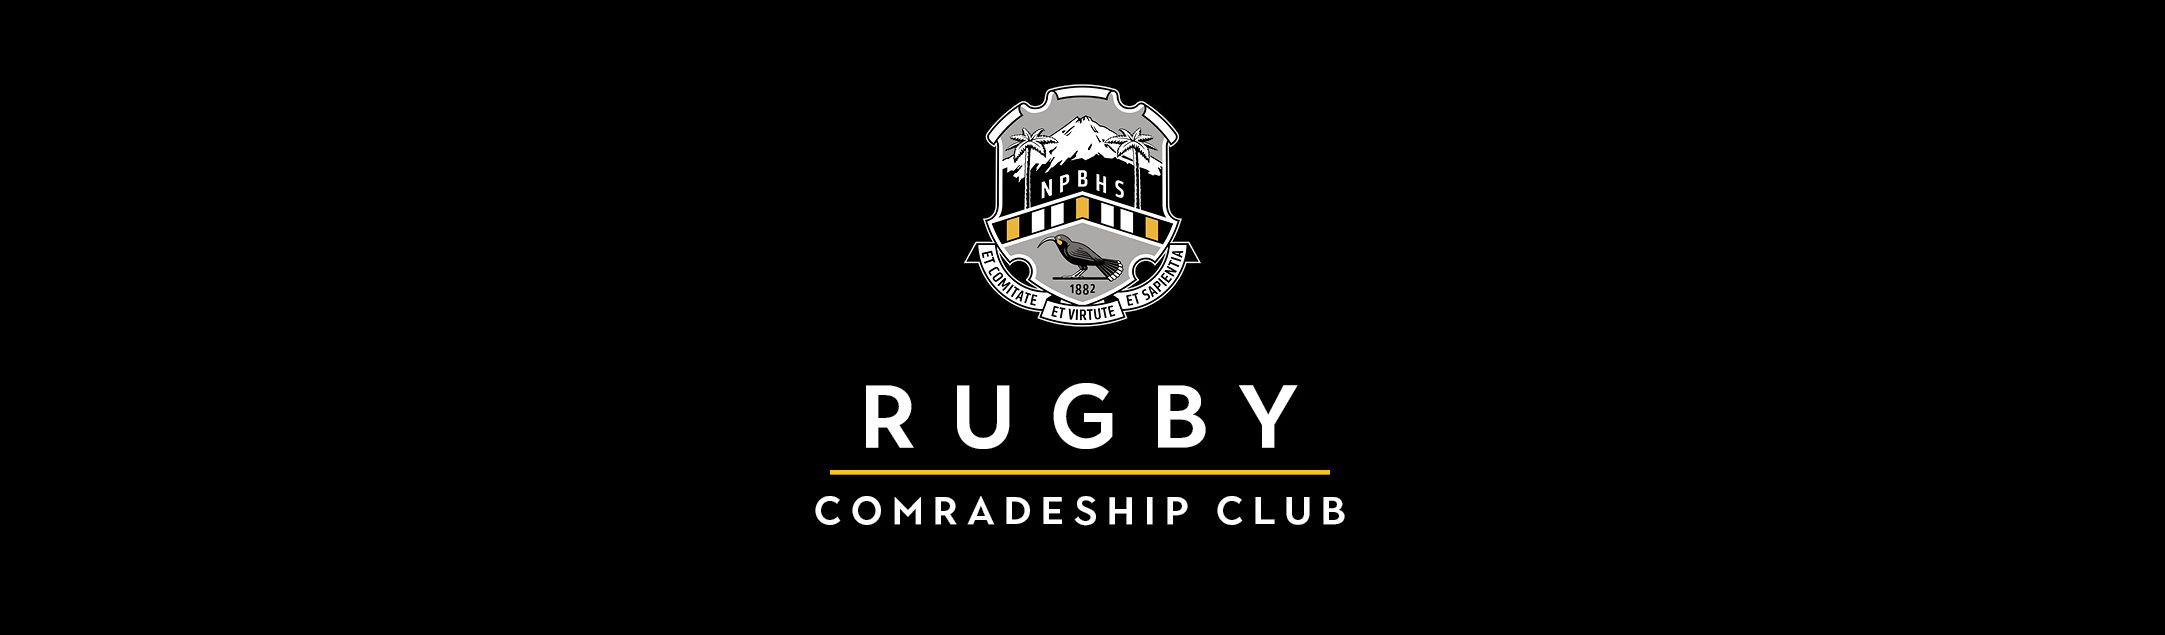 Rugby Comradeship Club Logo